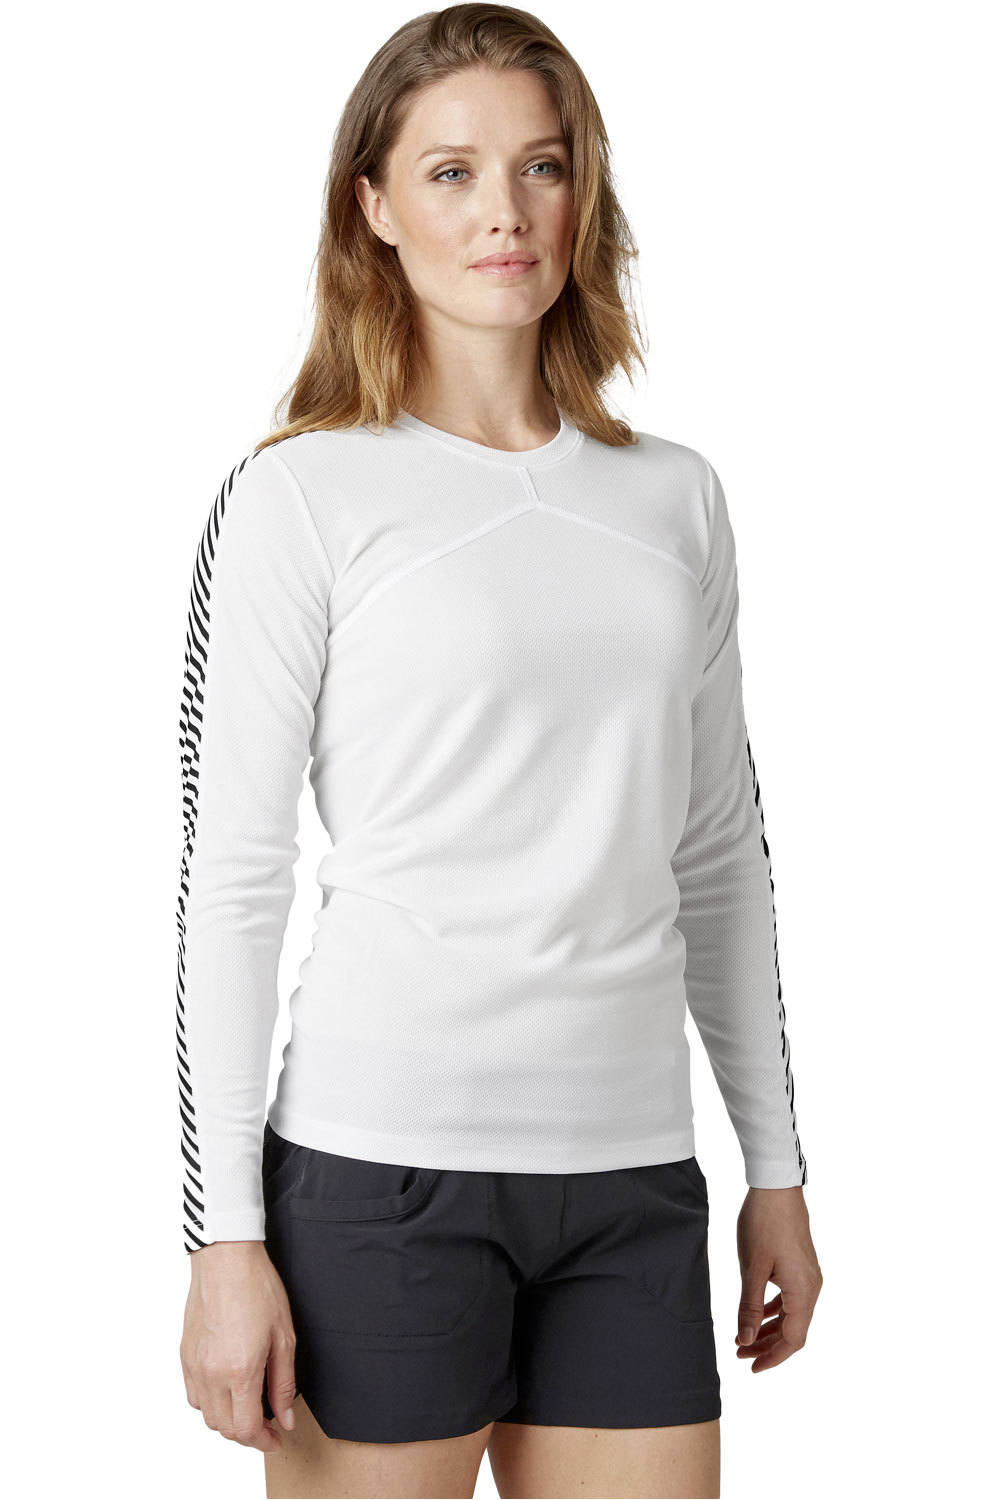 Helly Hansen camiseta térmica manga larga mujer W HH LIFA CREW vista frontal